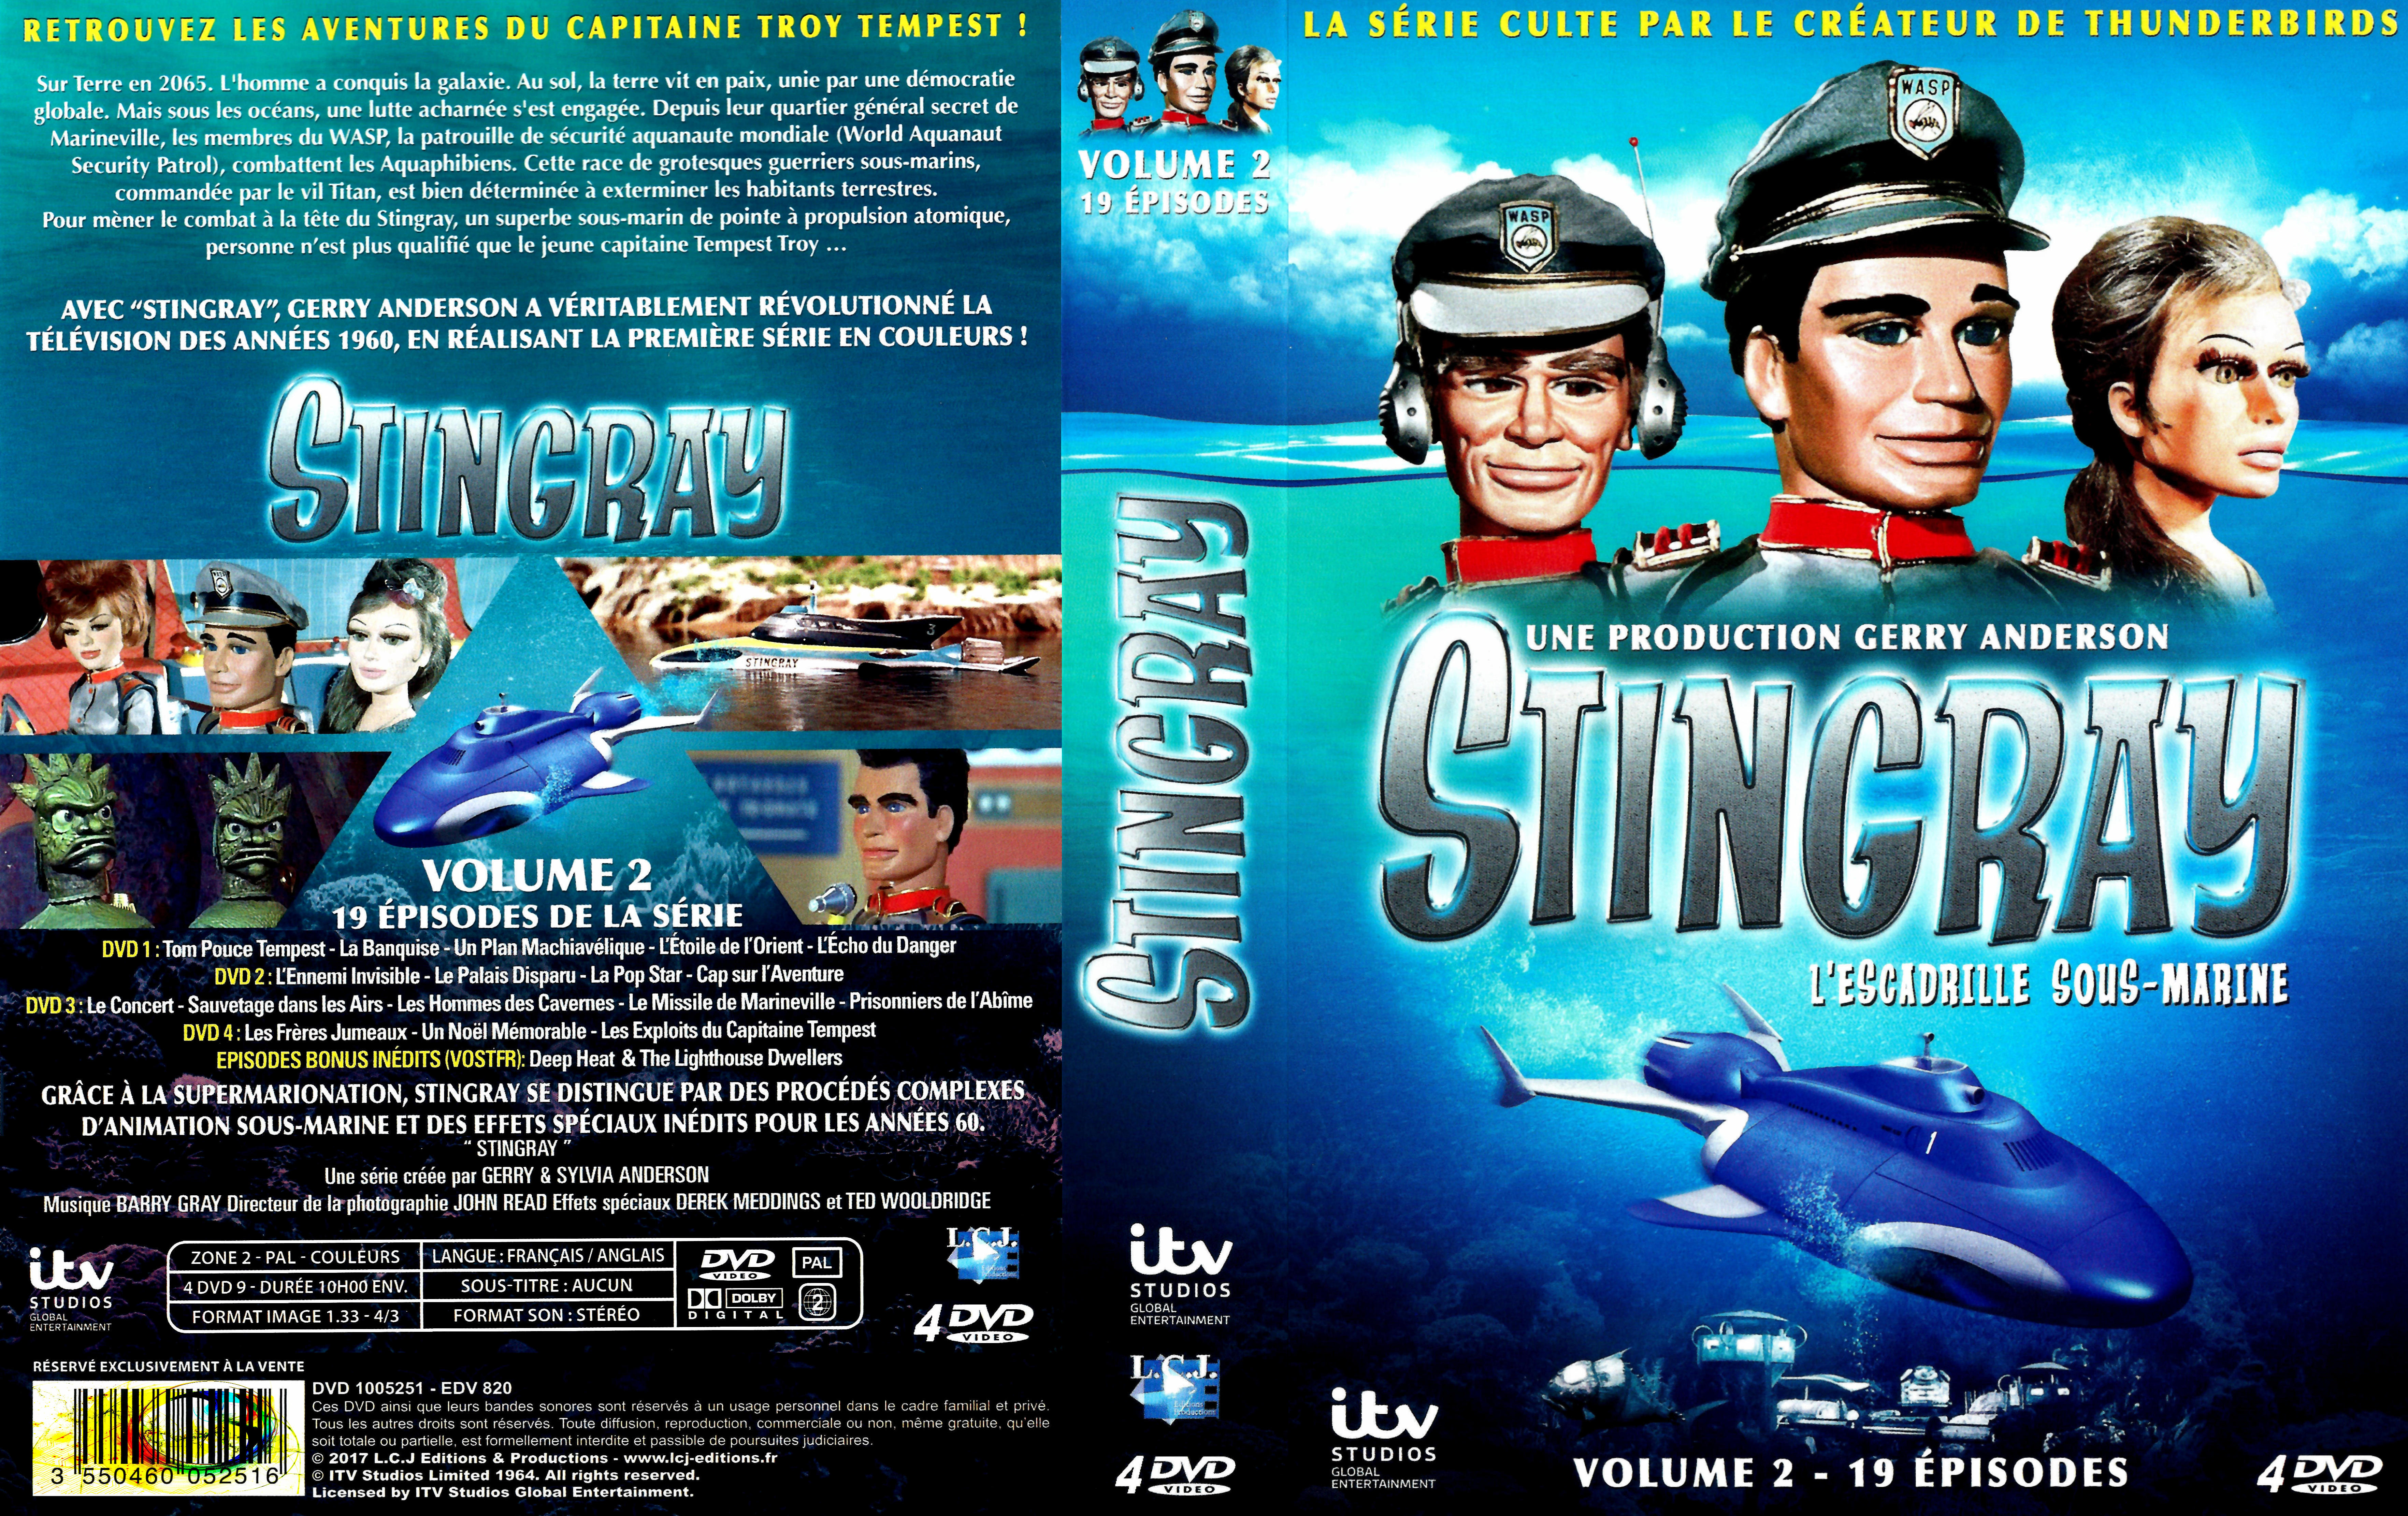 Jaquette DVD Stingray volume 2